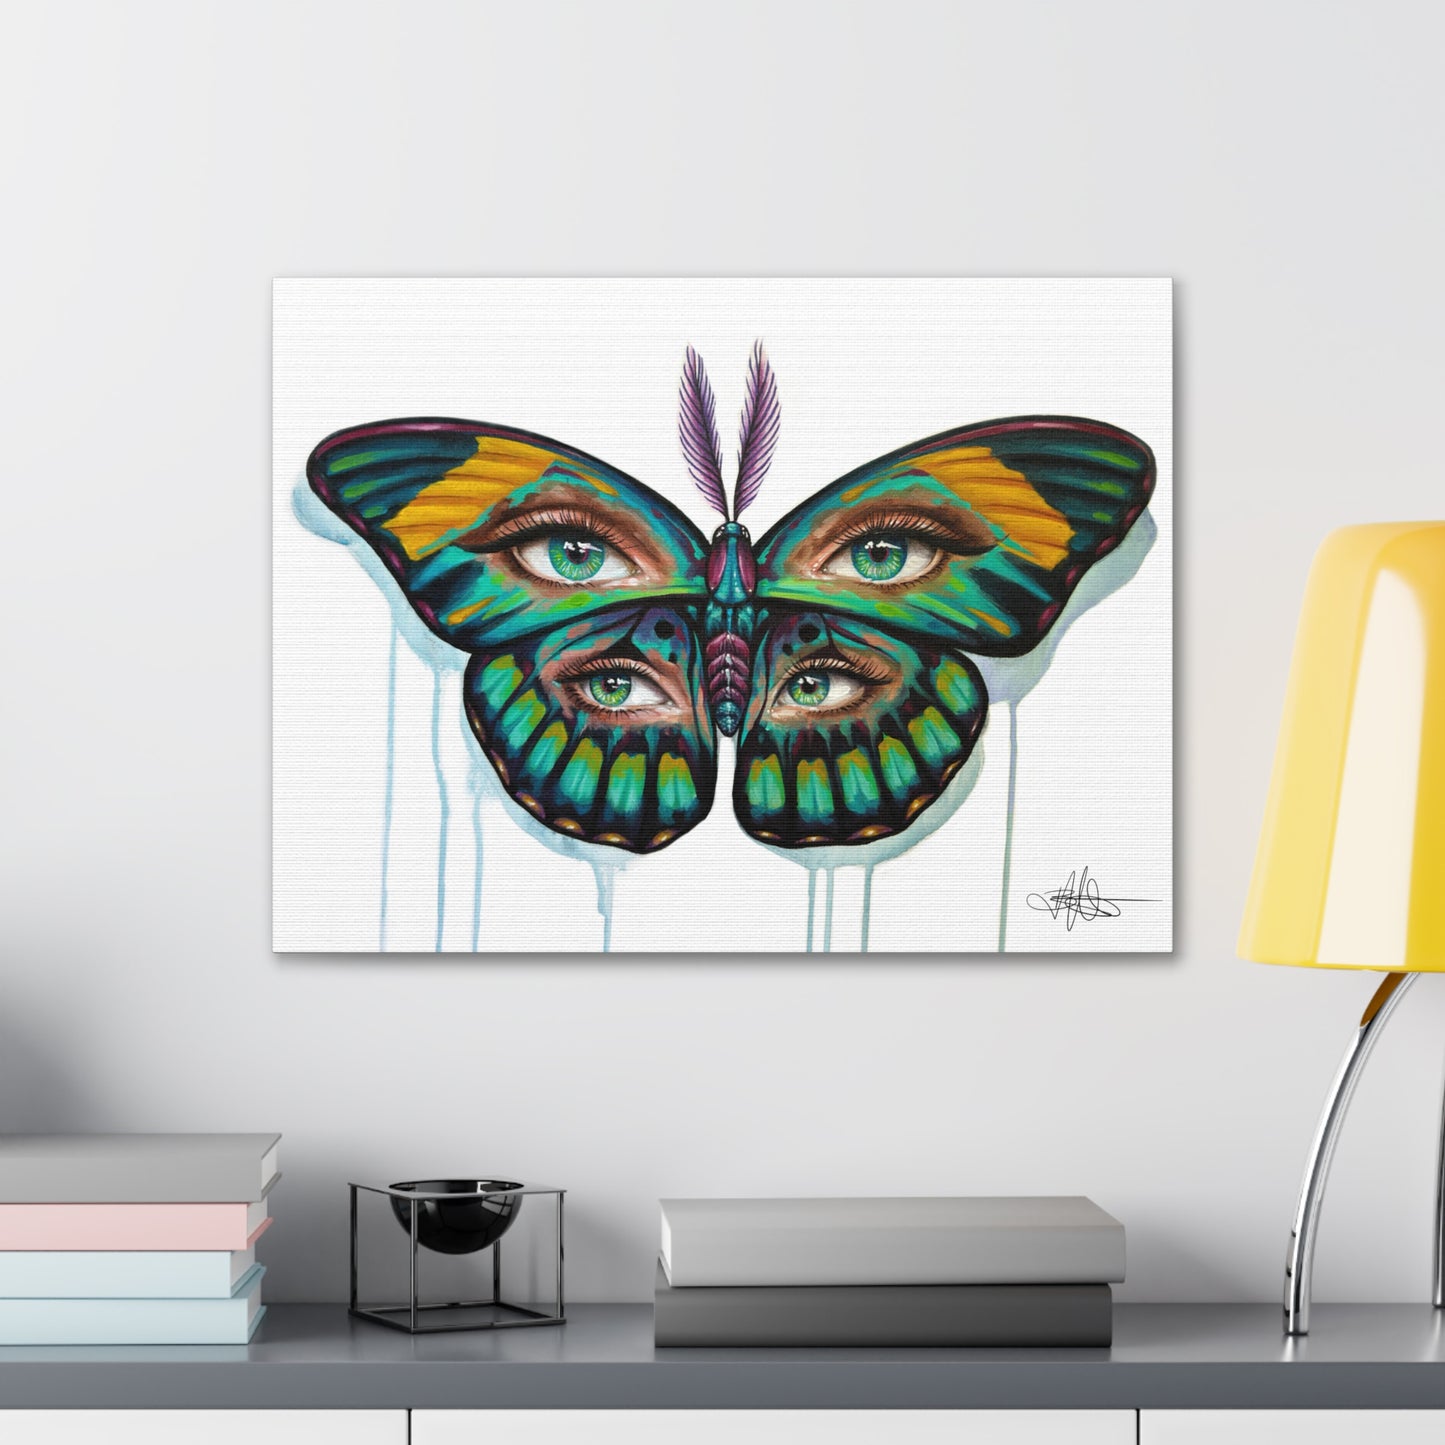 Moth Trip Canvas Gallery Wrap